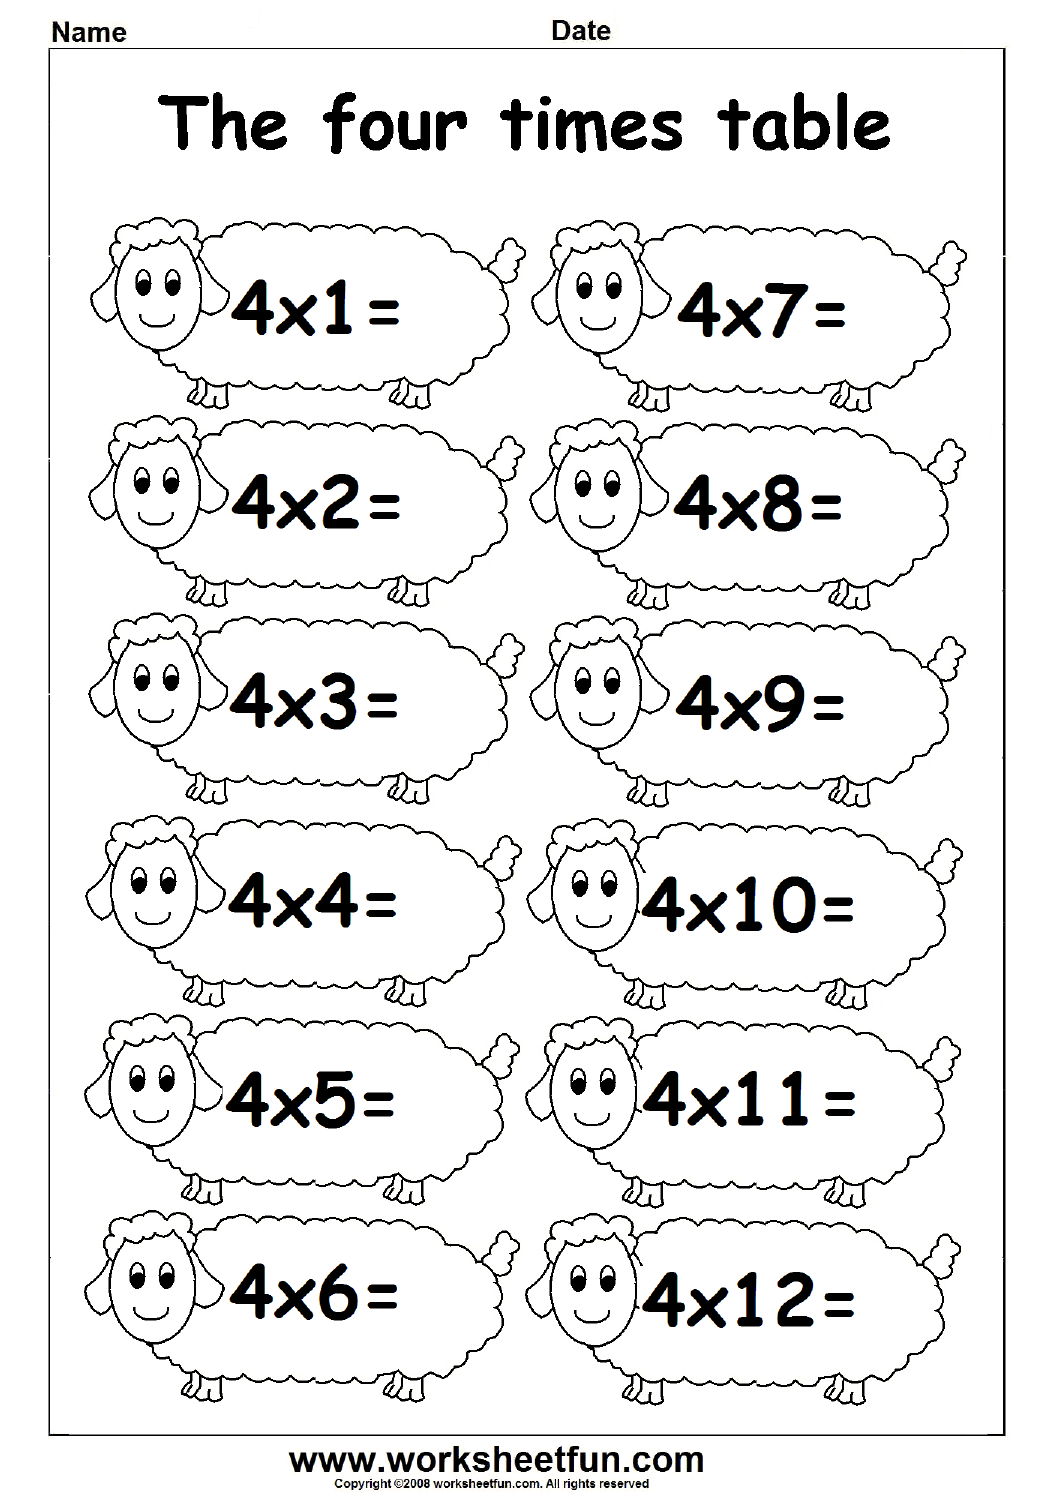 multiplication-worksheets-4-times-tables-printablemultiplication